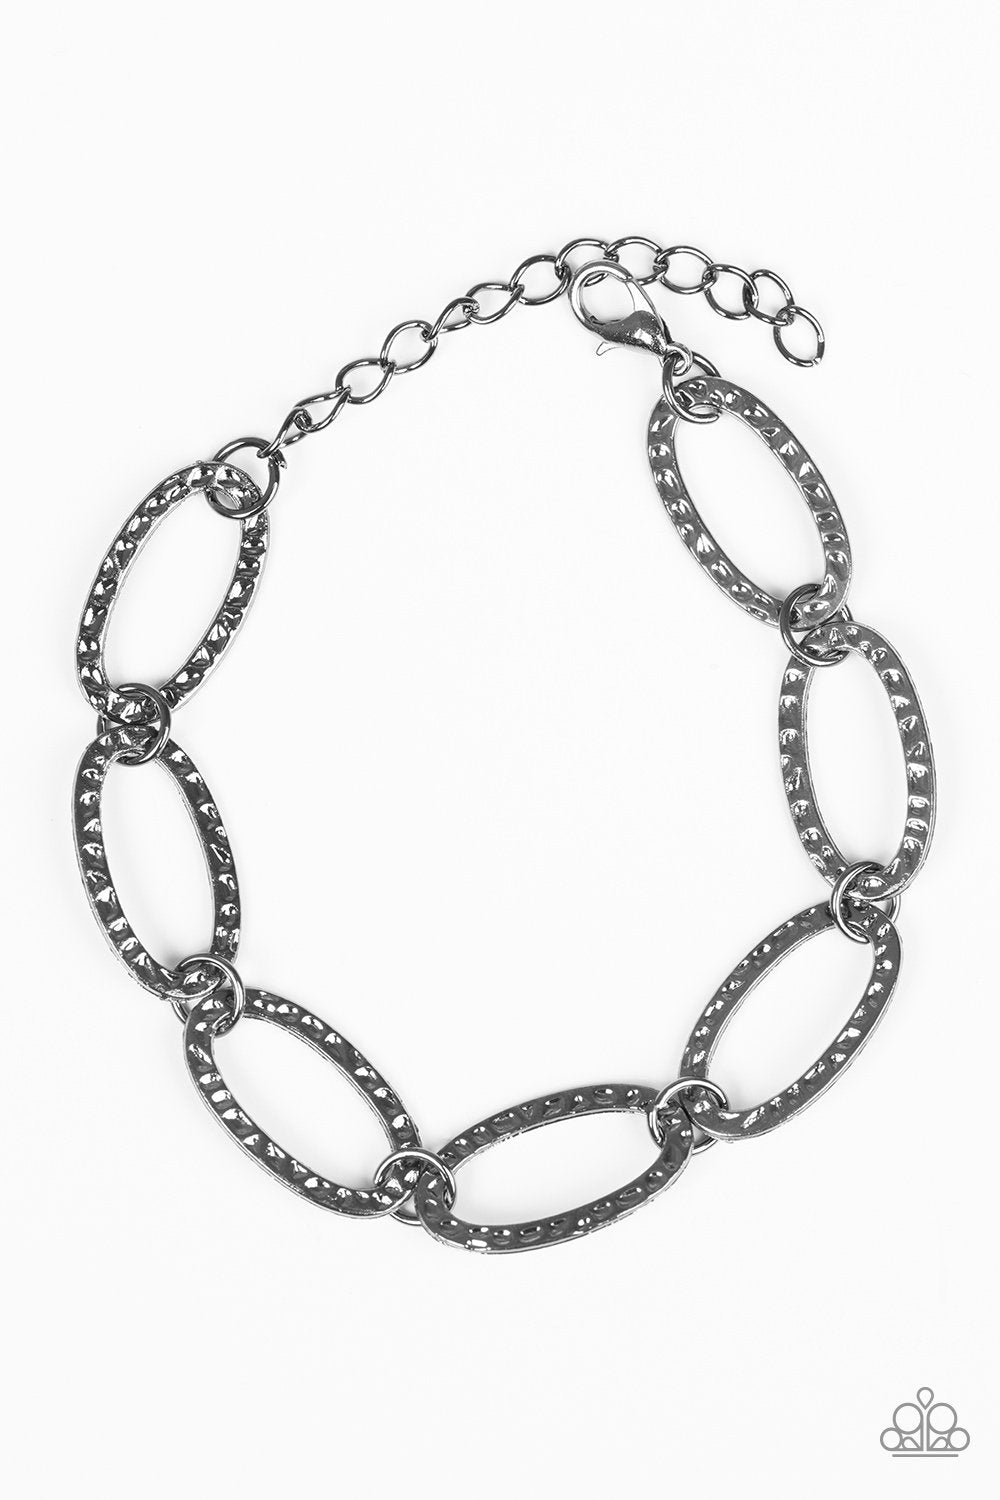 Legendary Lioness - Black/Gunmetal necklace w/ matching bracelet